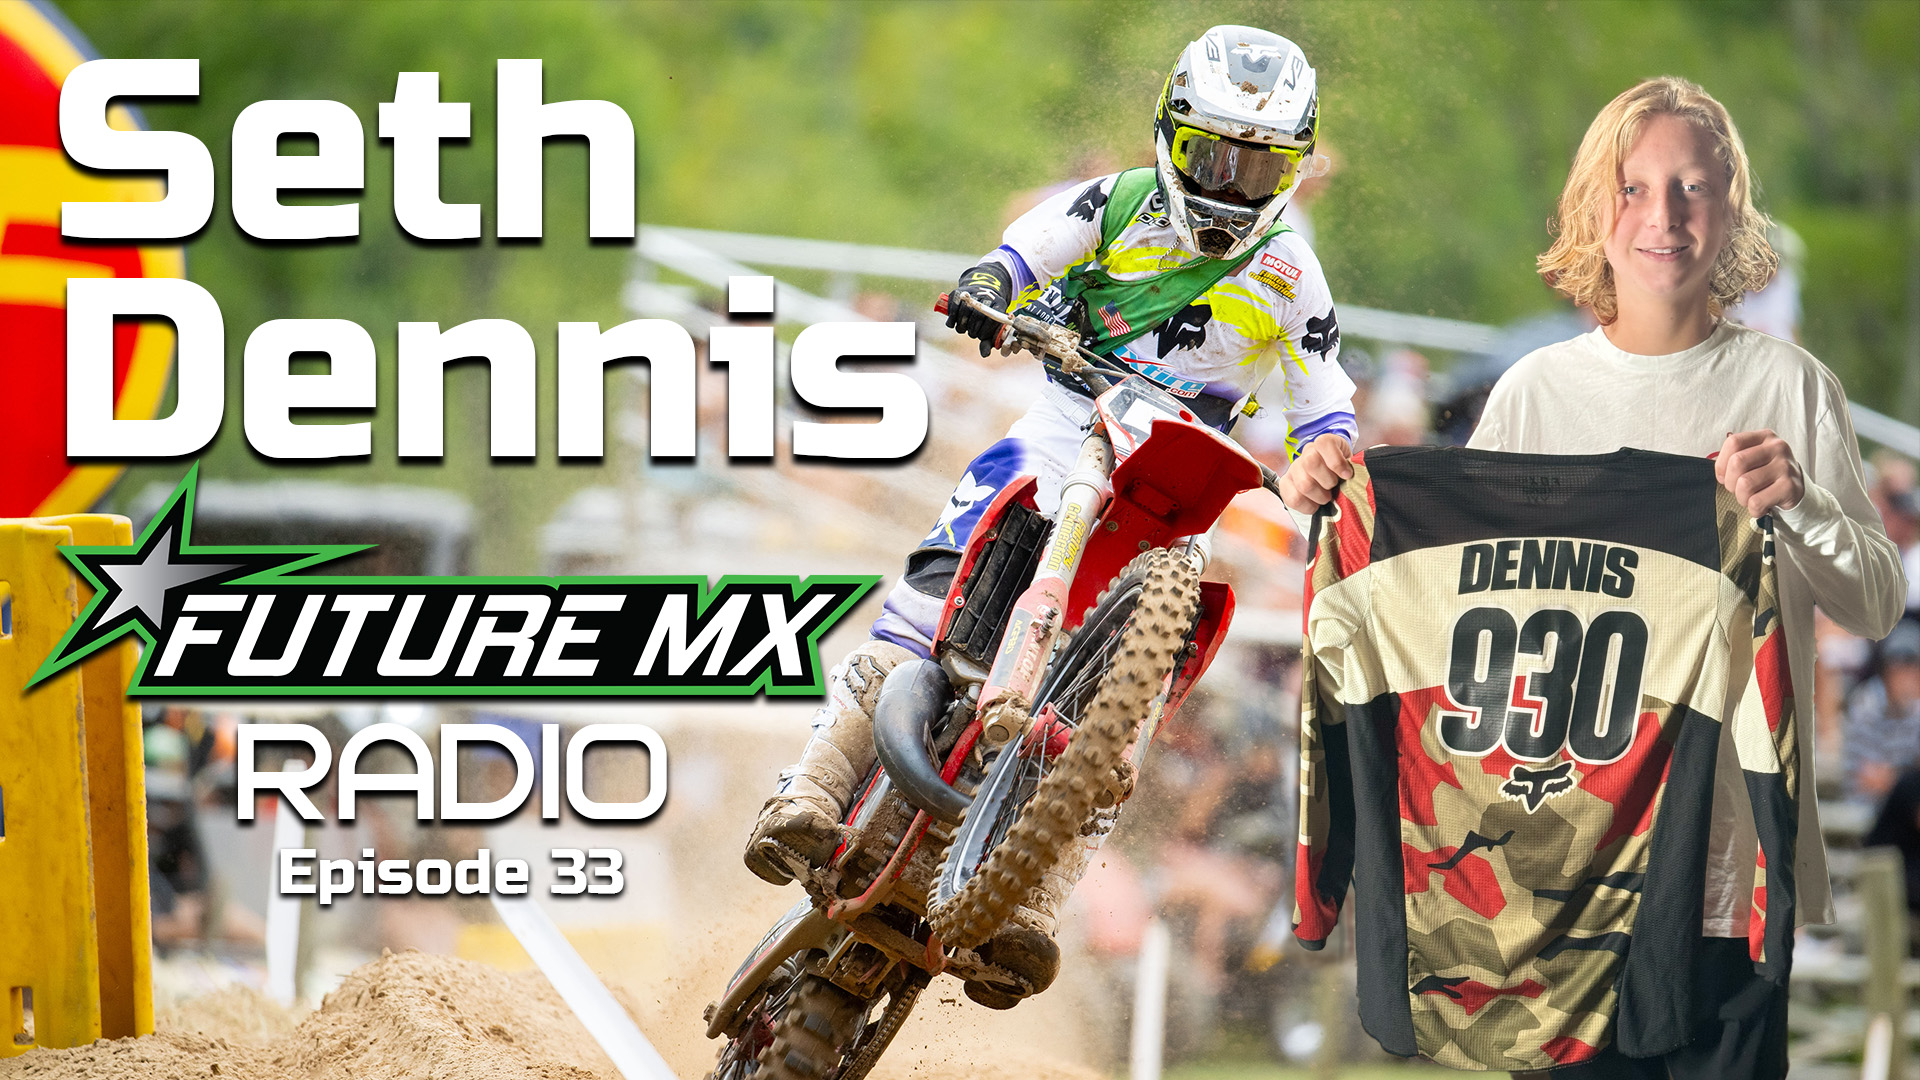 Future Motocross Radio | Episode 33: Seth Dennis